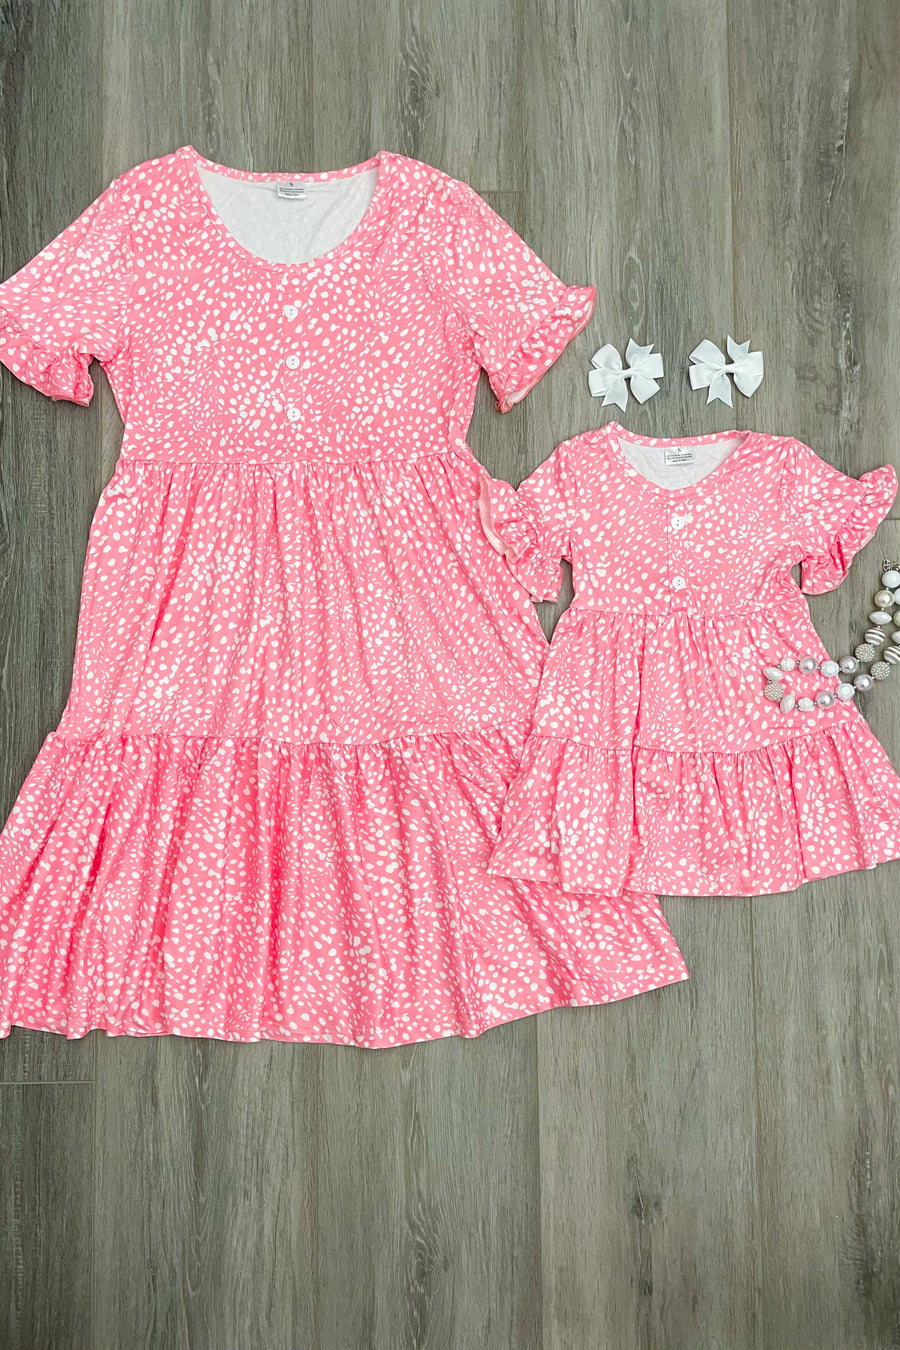 Pink Mommy n Me Ruffle Dress - Rylee Faith Designs